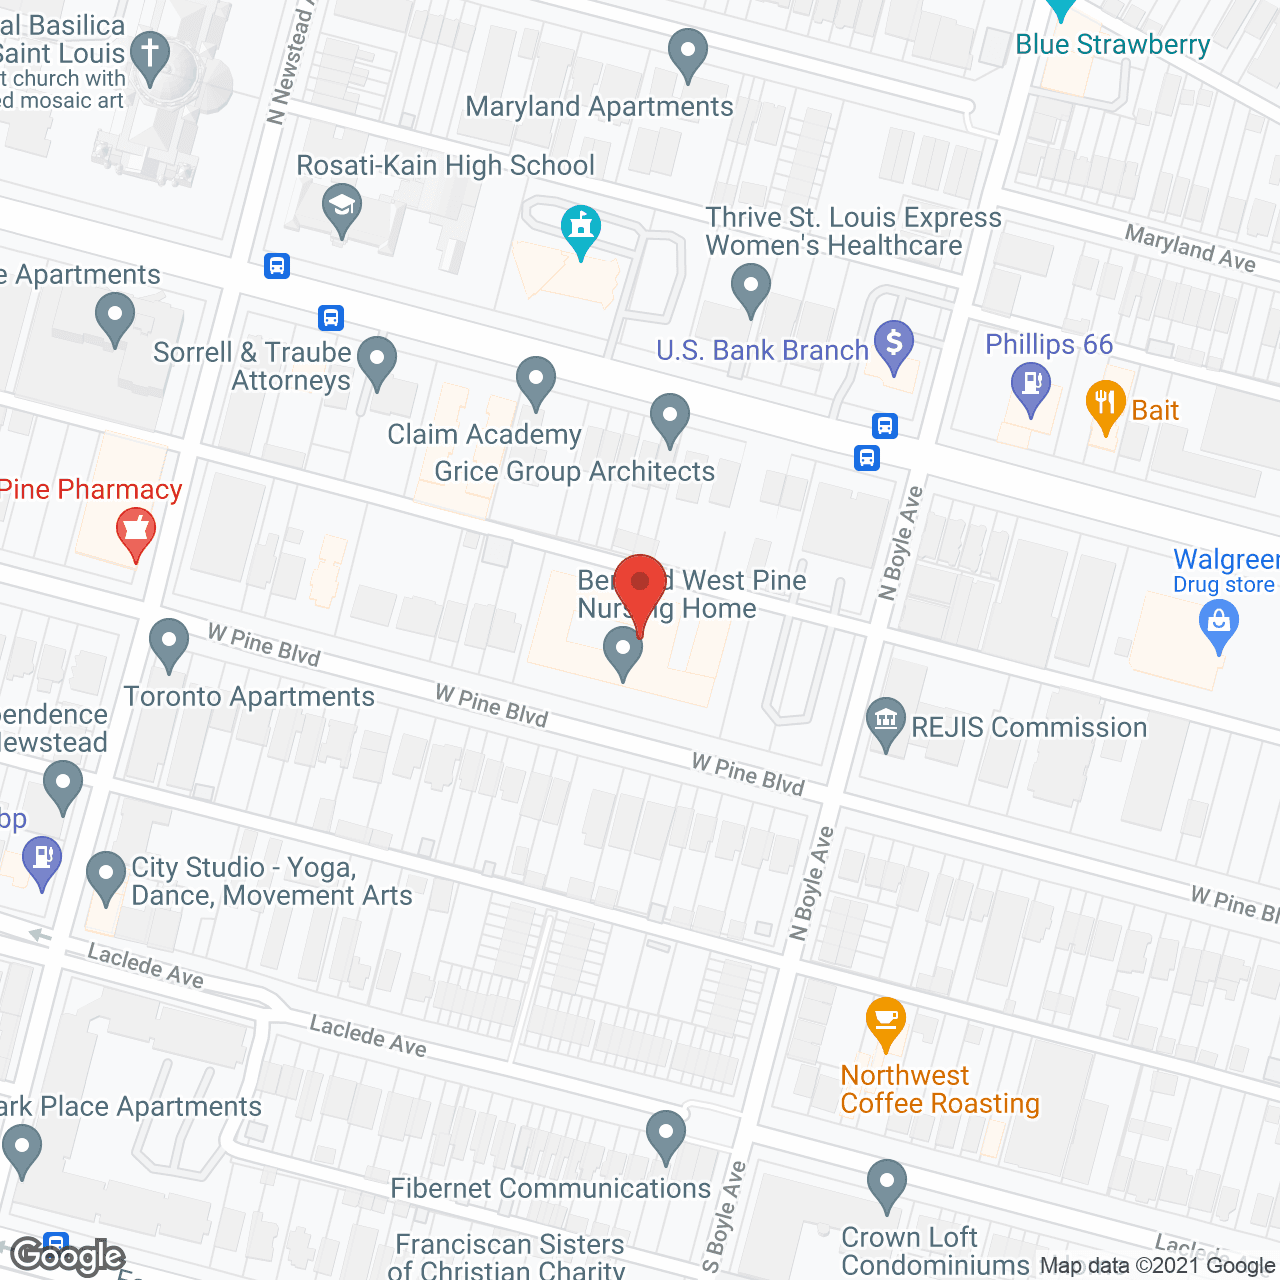 Bernard Care Center in google map